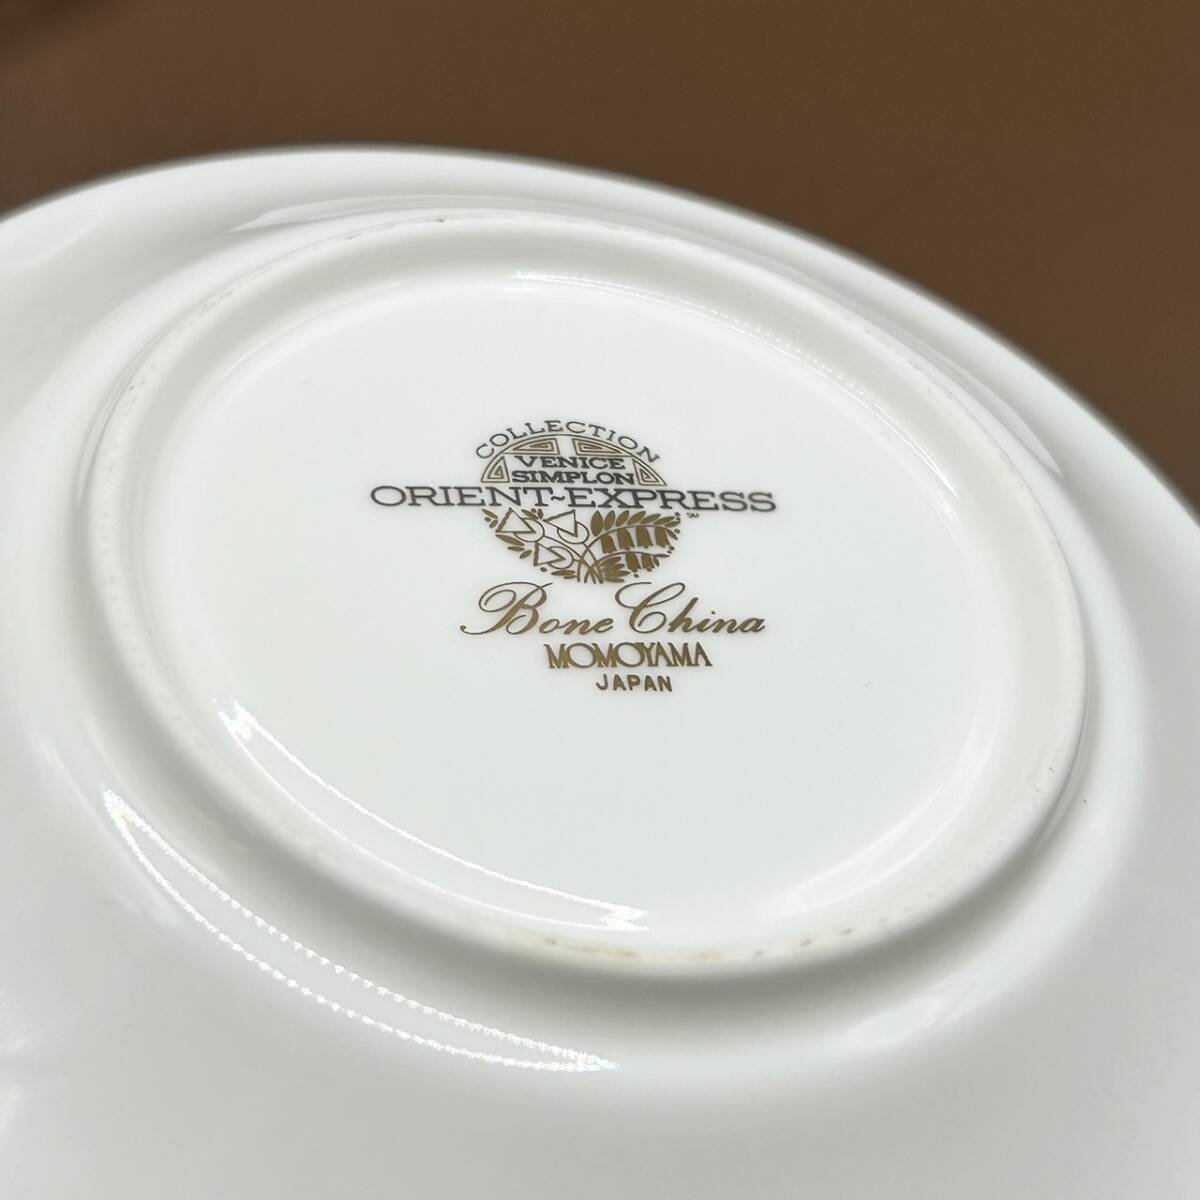 A)桃山陶器 オリエンタルエクスプレスボーンチャイナカップ 赤 カップ＆ソーサー 金縁 金彩 白 ホワイト レッド E1103_画像8